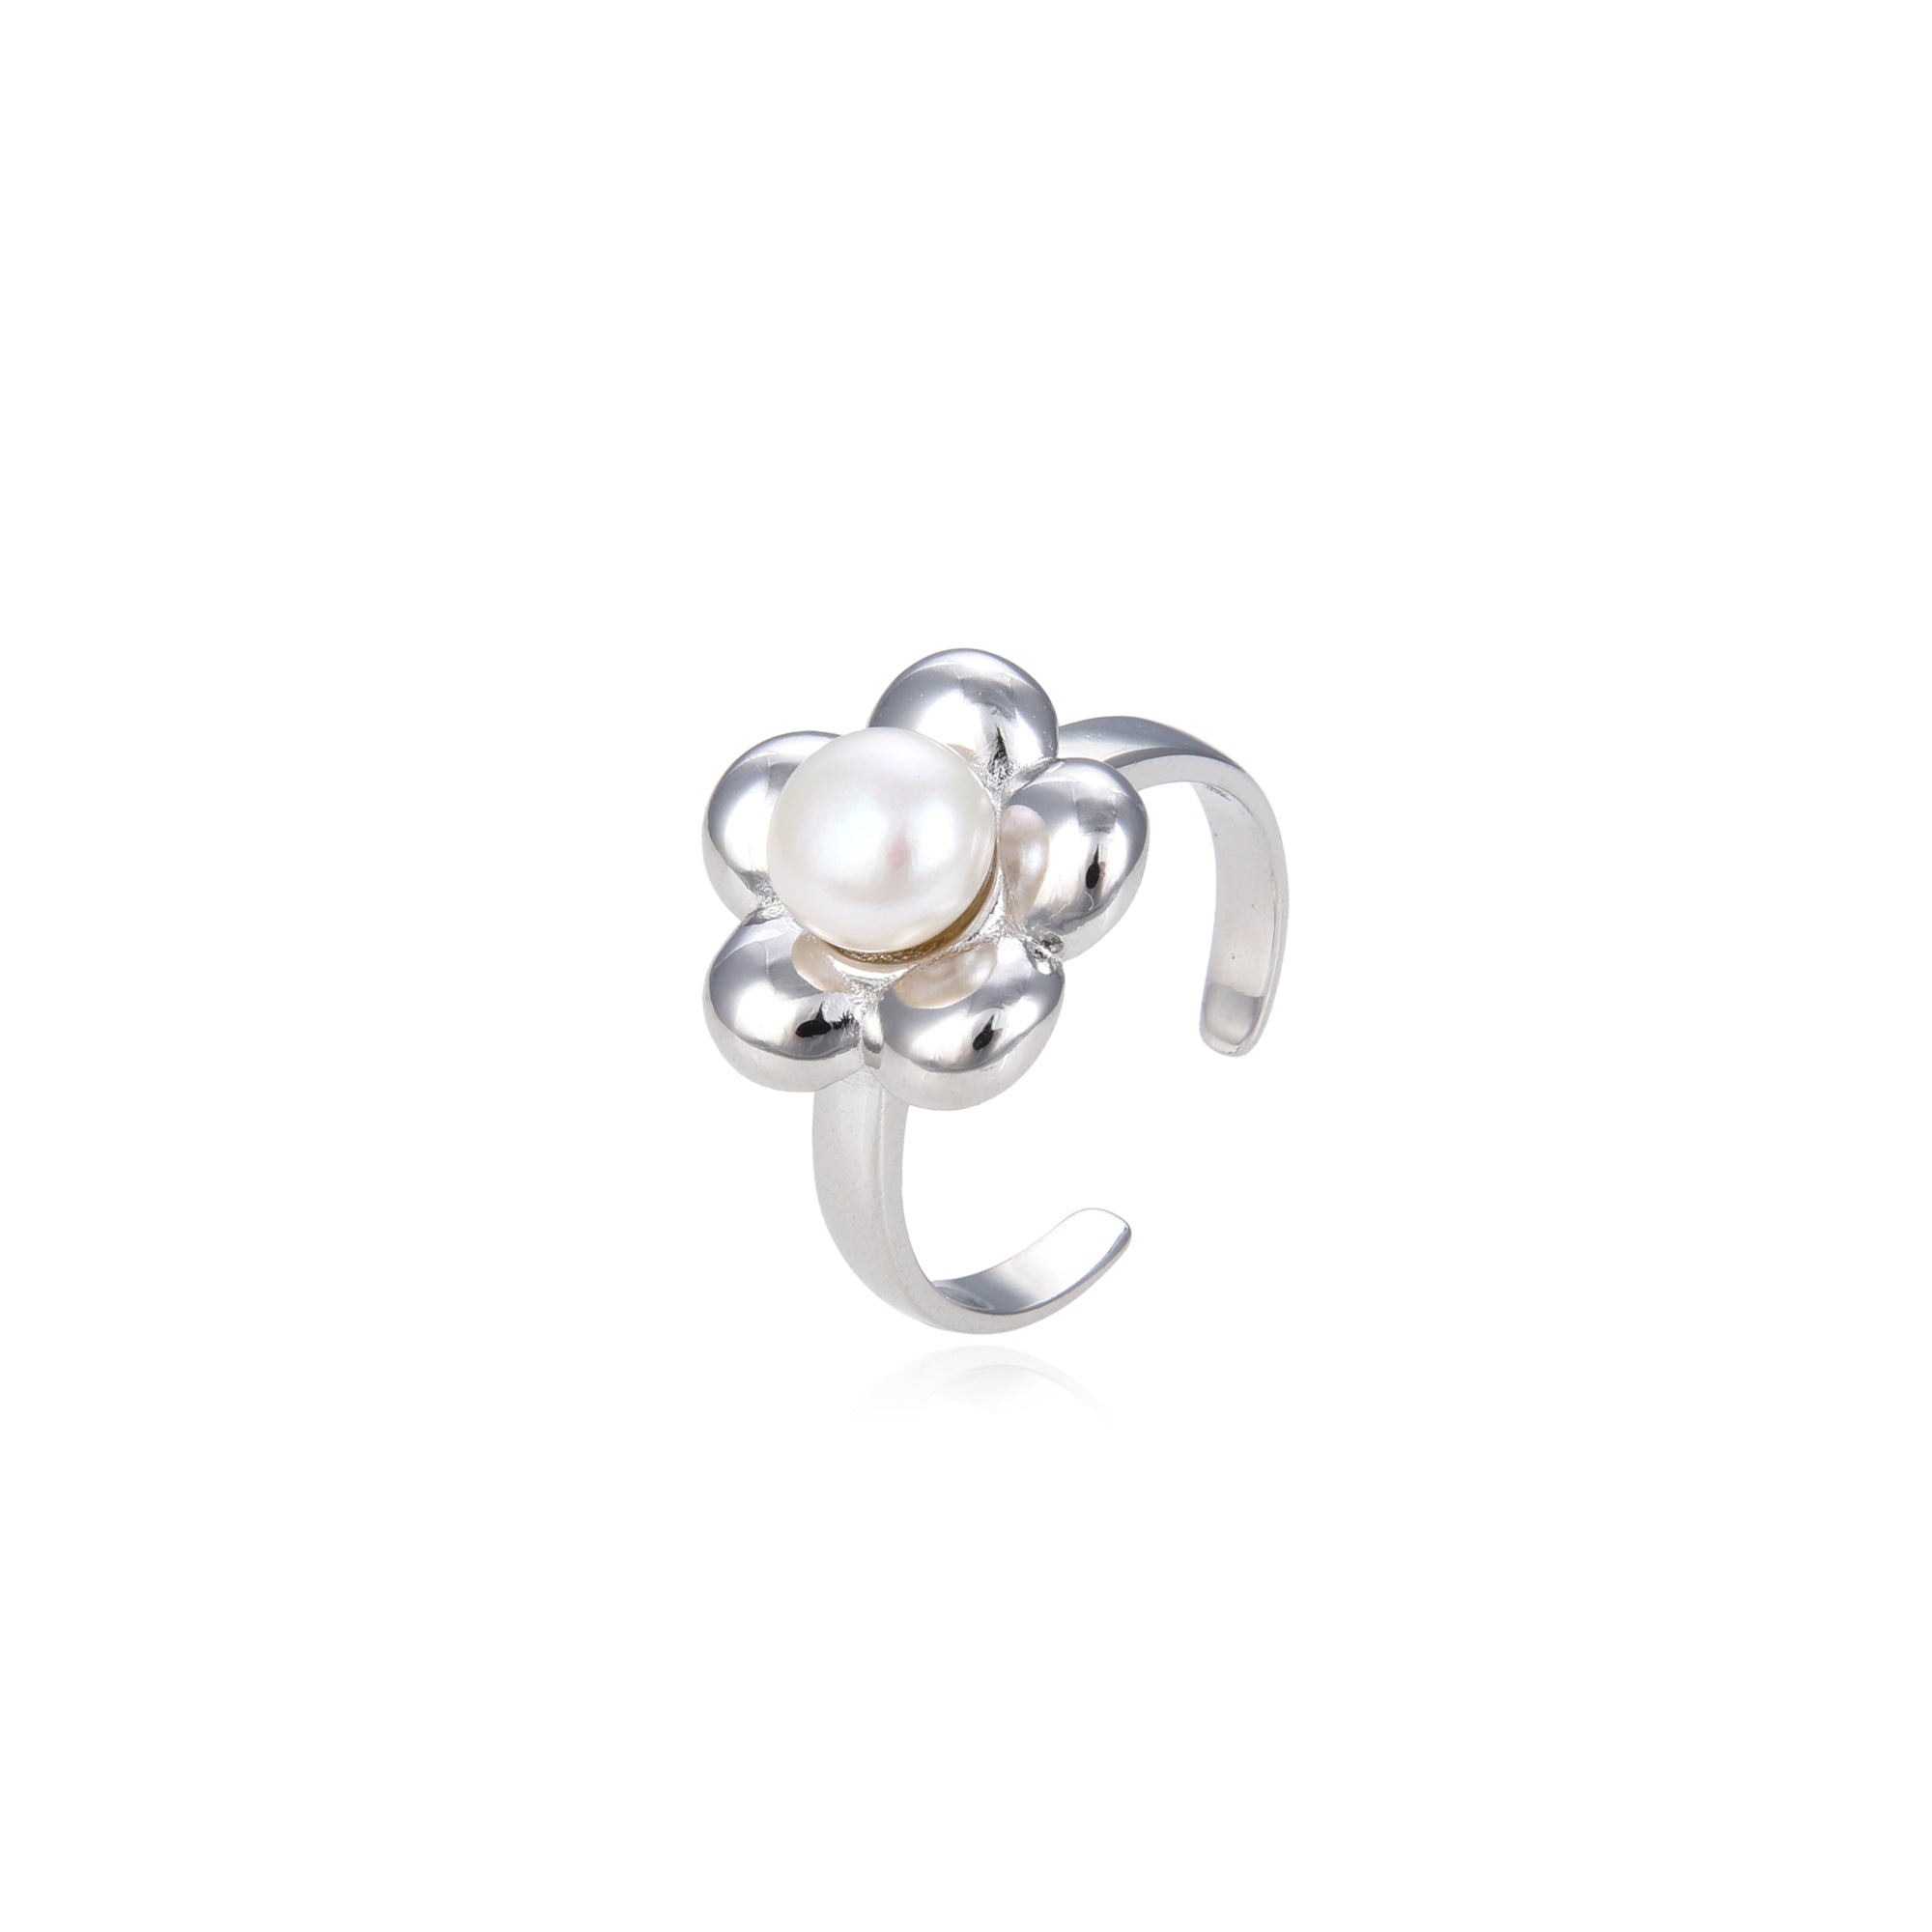 Flower Power Ring, Gold Vermeil/Sterling Silver